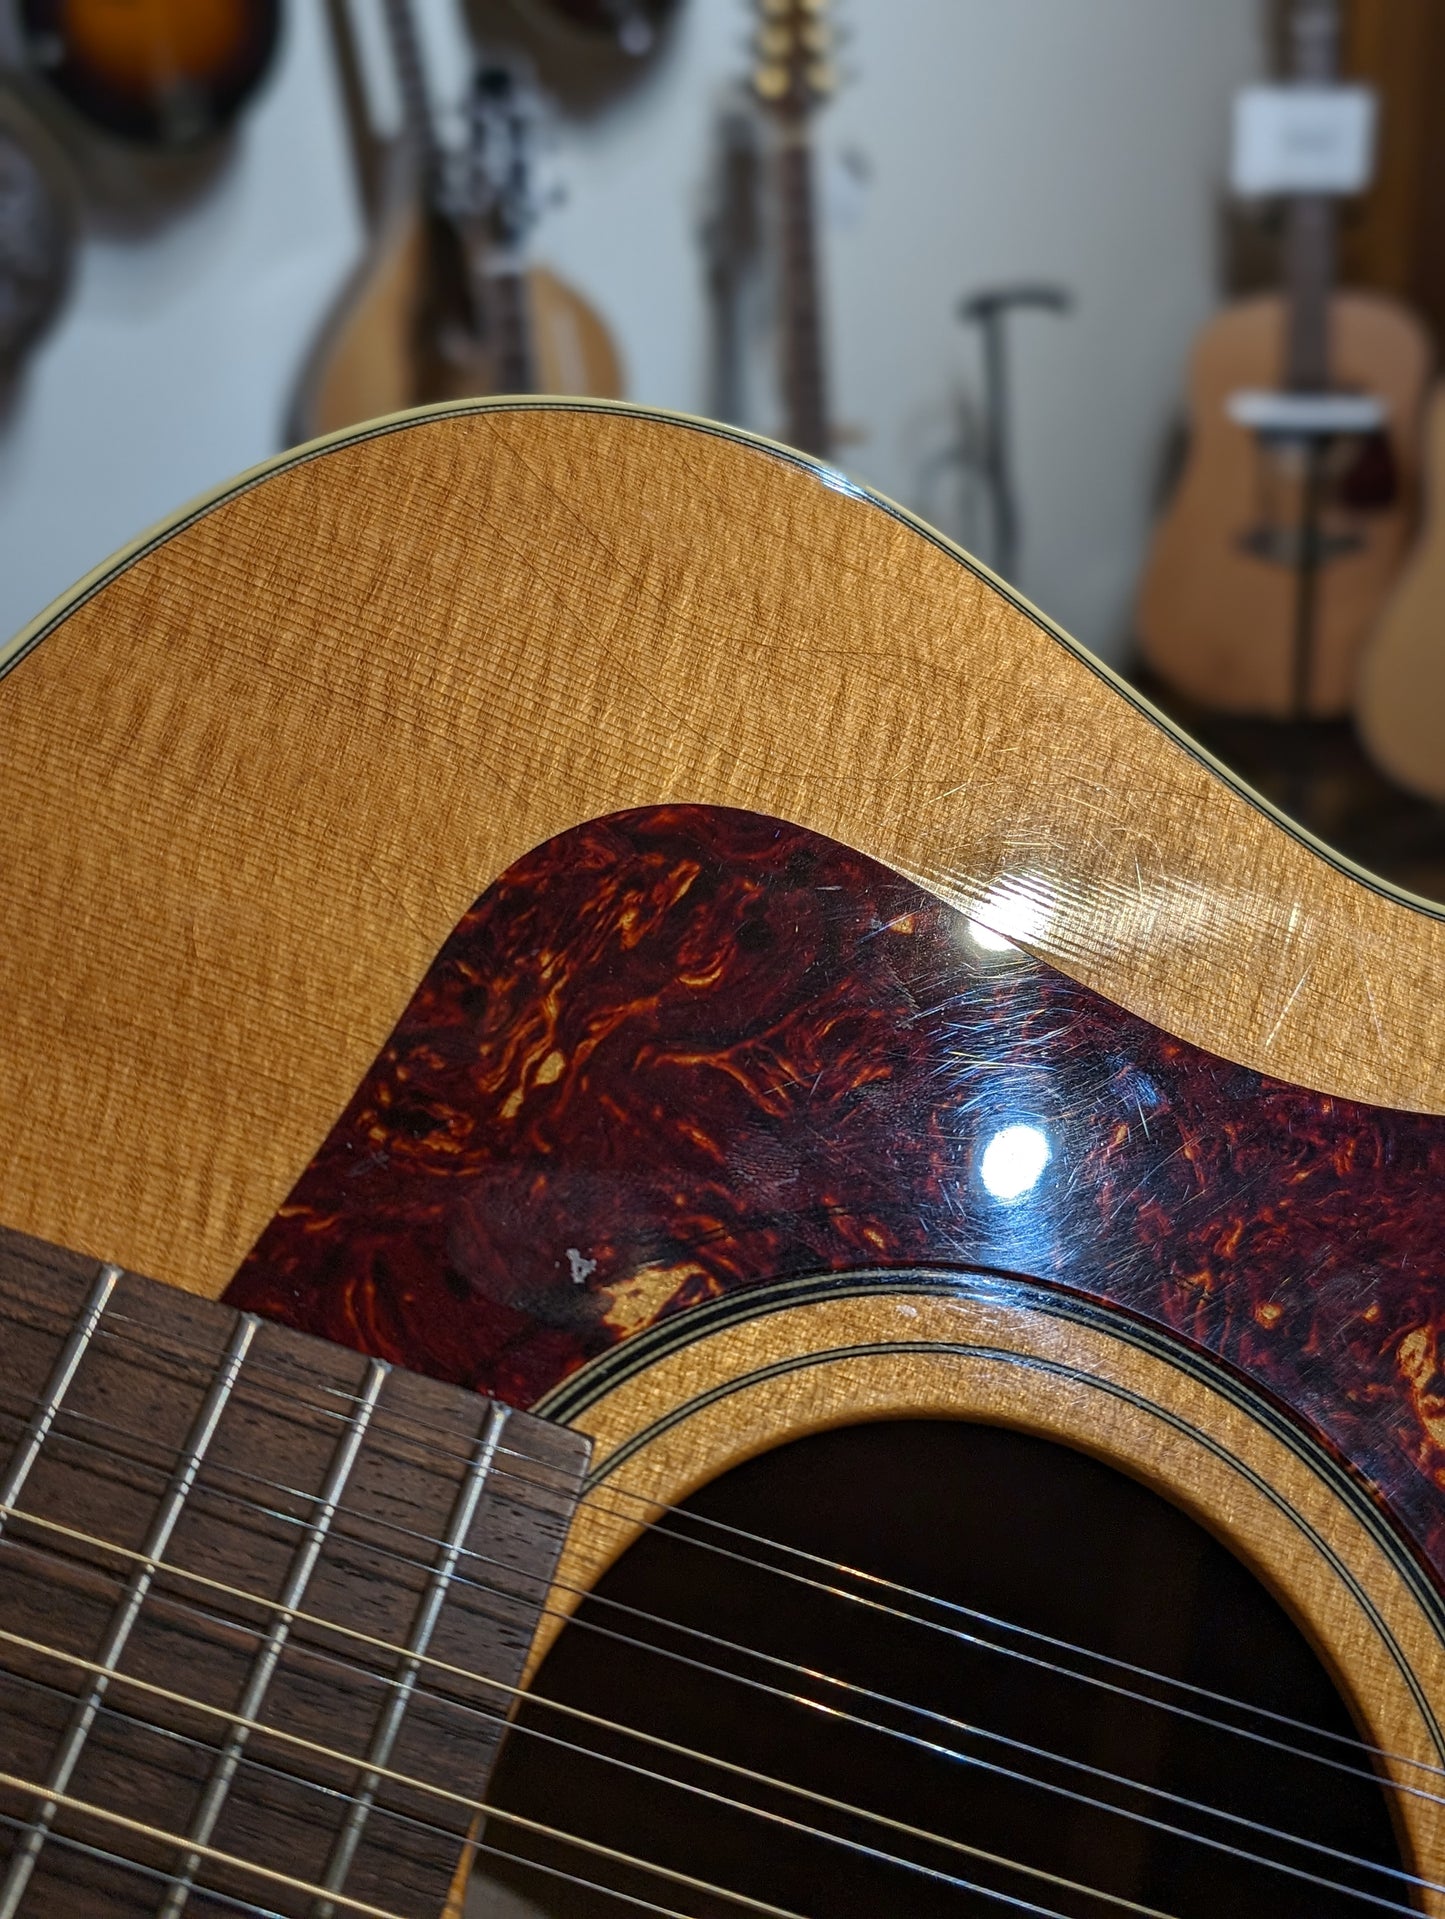 Guild F212XL Standard 12 String Acoustic/Electric Guitar w/Case (2012)